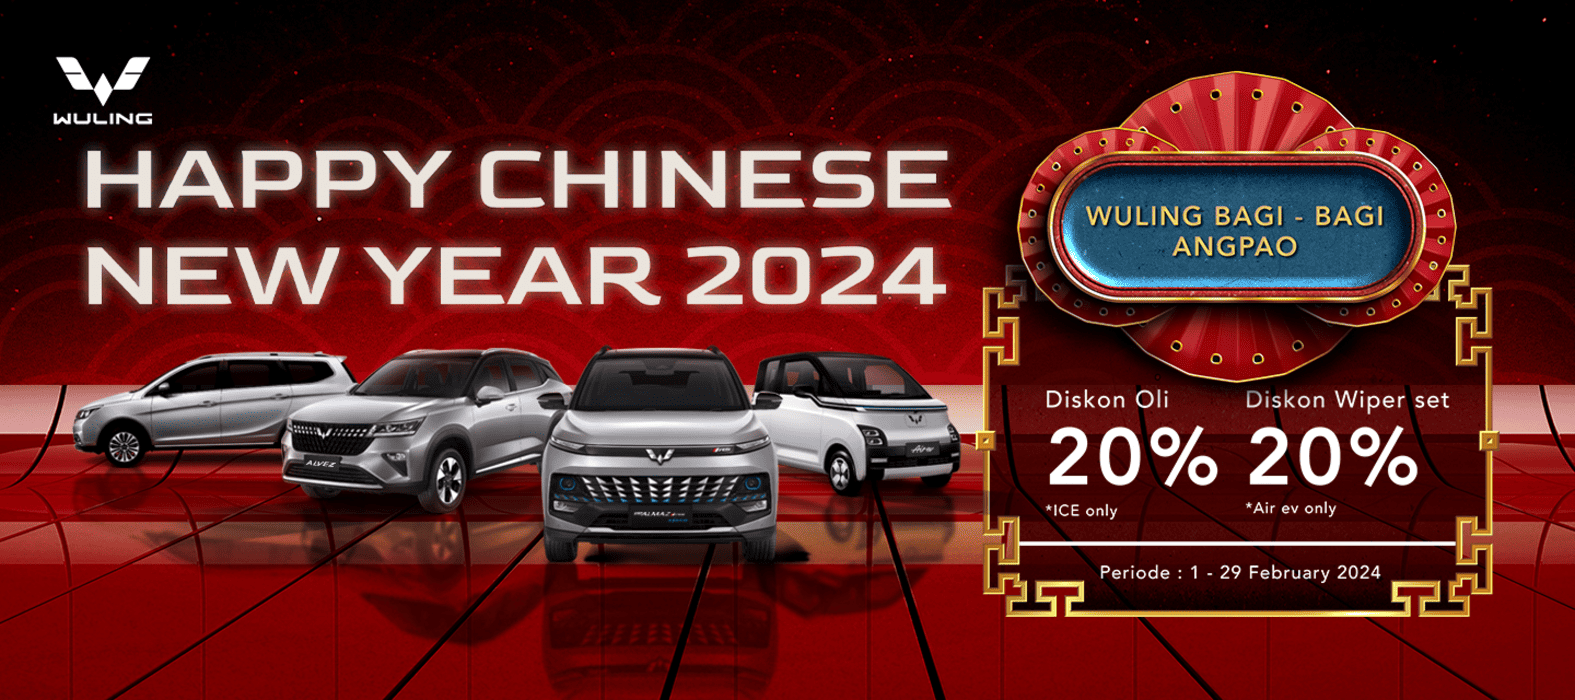 Promo Wuling bagi-bagi angpao berupa diskon servis produk tertentu dalam rangka Tahun Baru Imlek 2024.